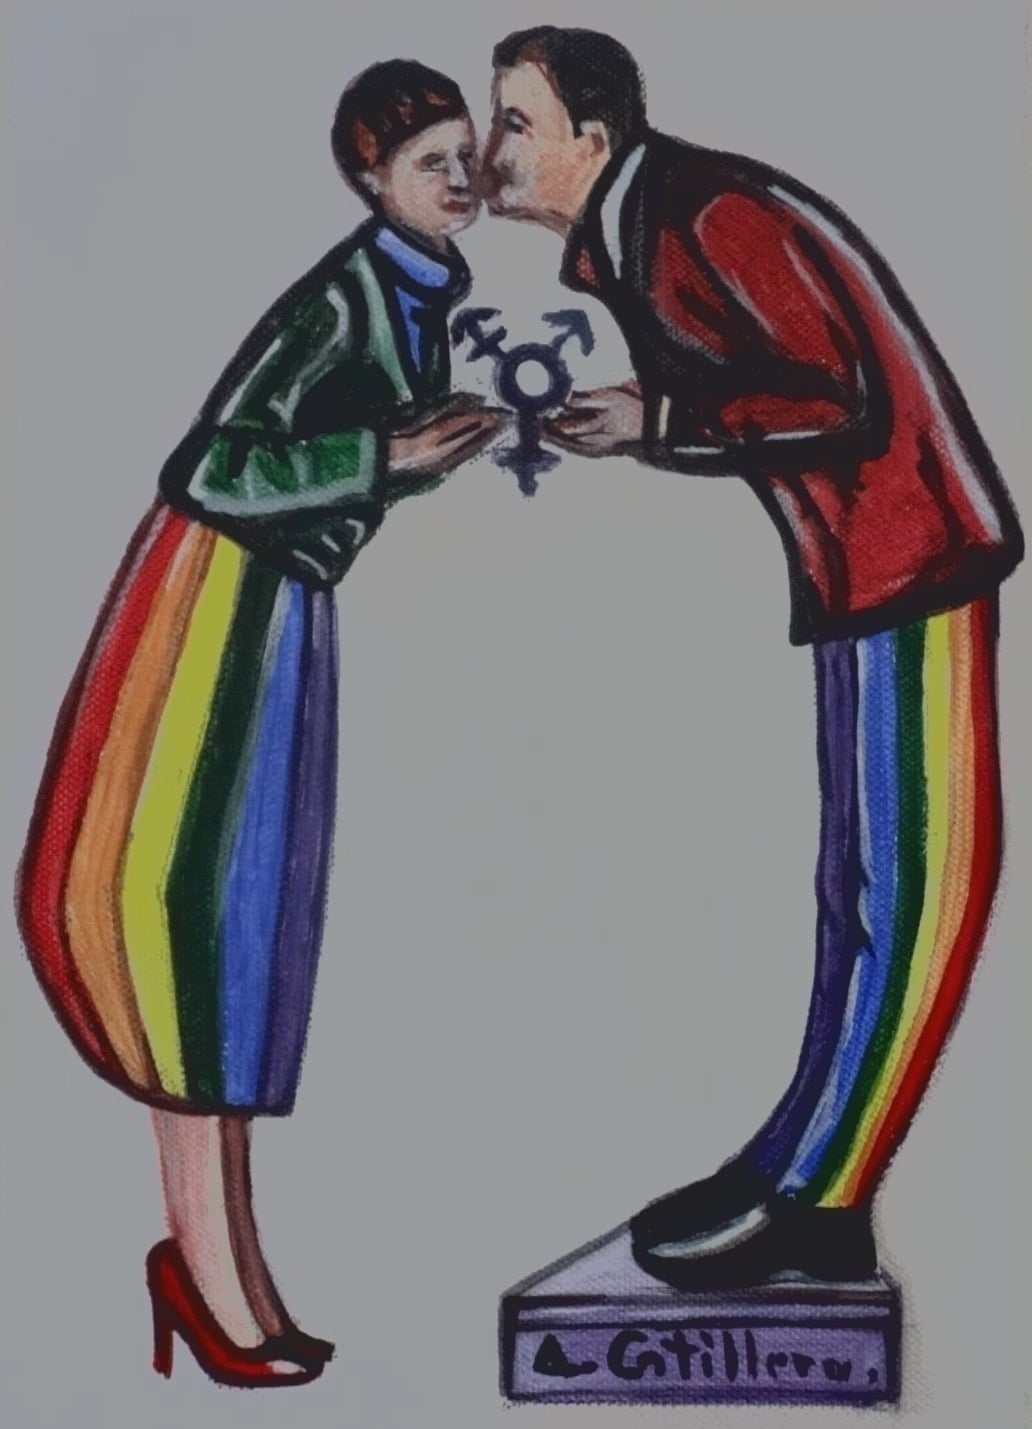 Orgullo LGBT - 28 de junio de 2021